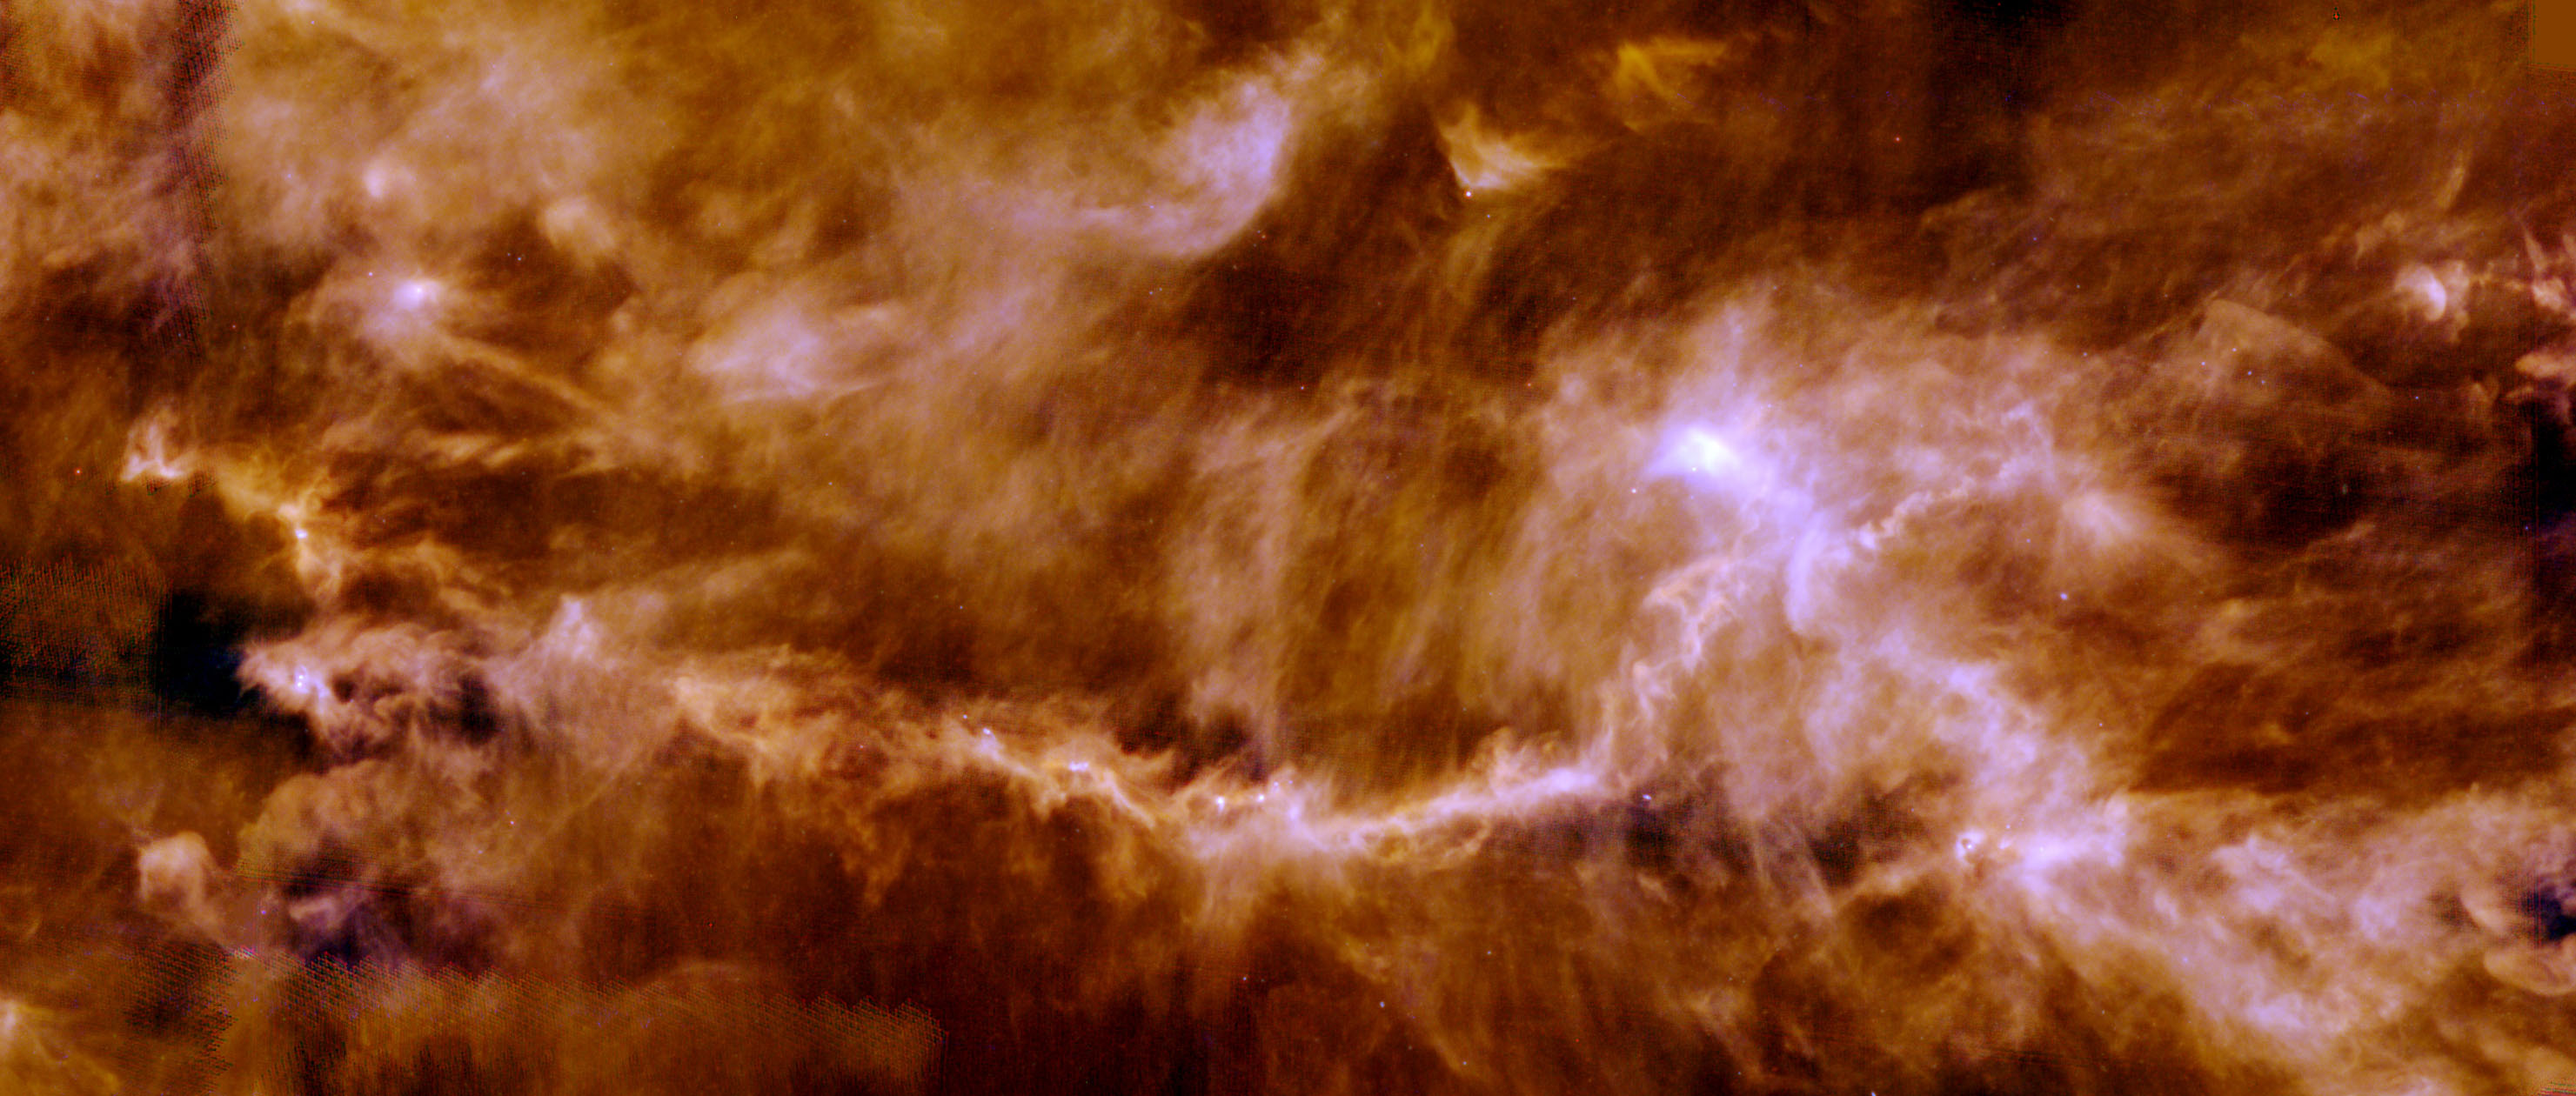 The B211/B213 filament in the Taurus Molecular Cloud. Credit: ESA/Herschel/PACS, SPIRE/Gould Belt survey Key Programme/Palmeirim et al. 2013